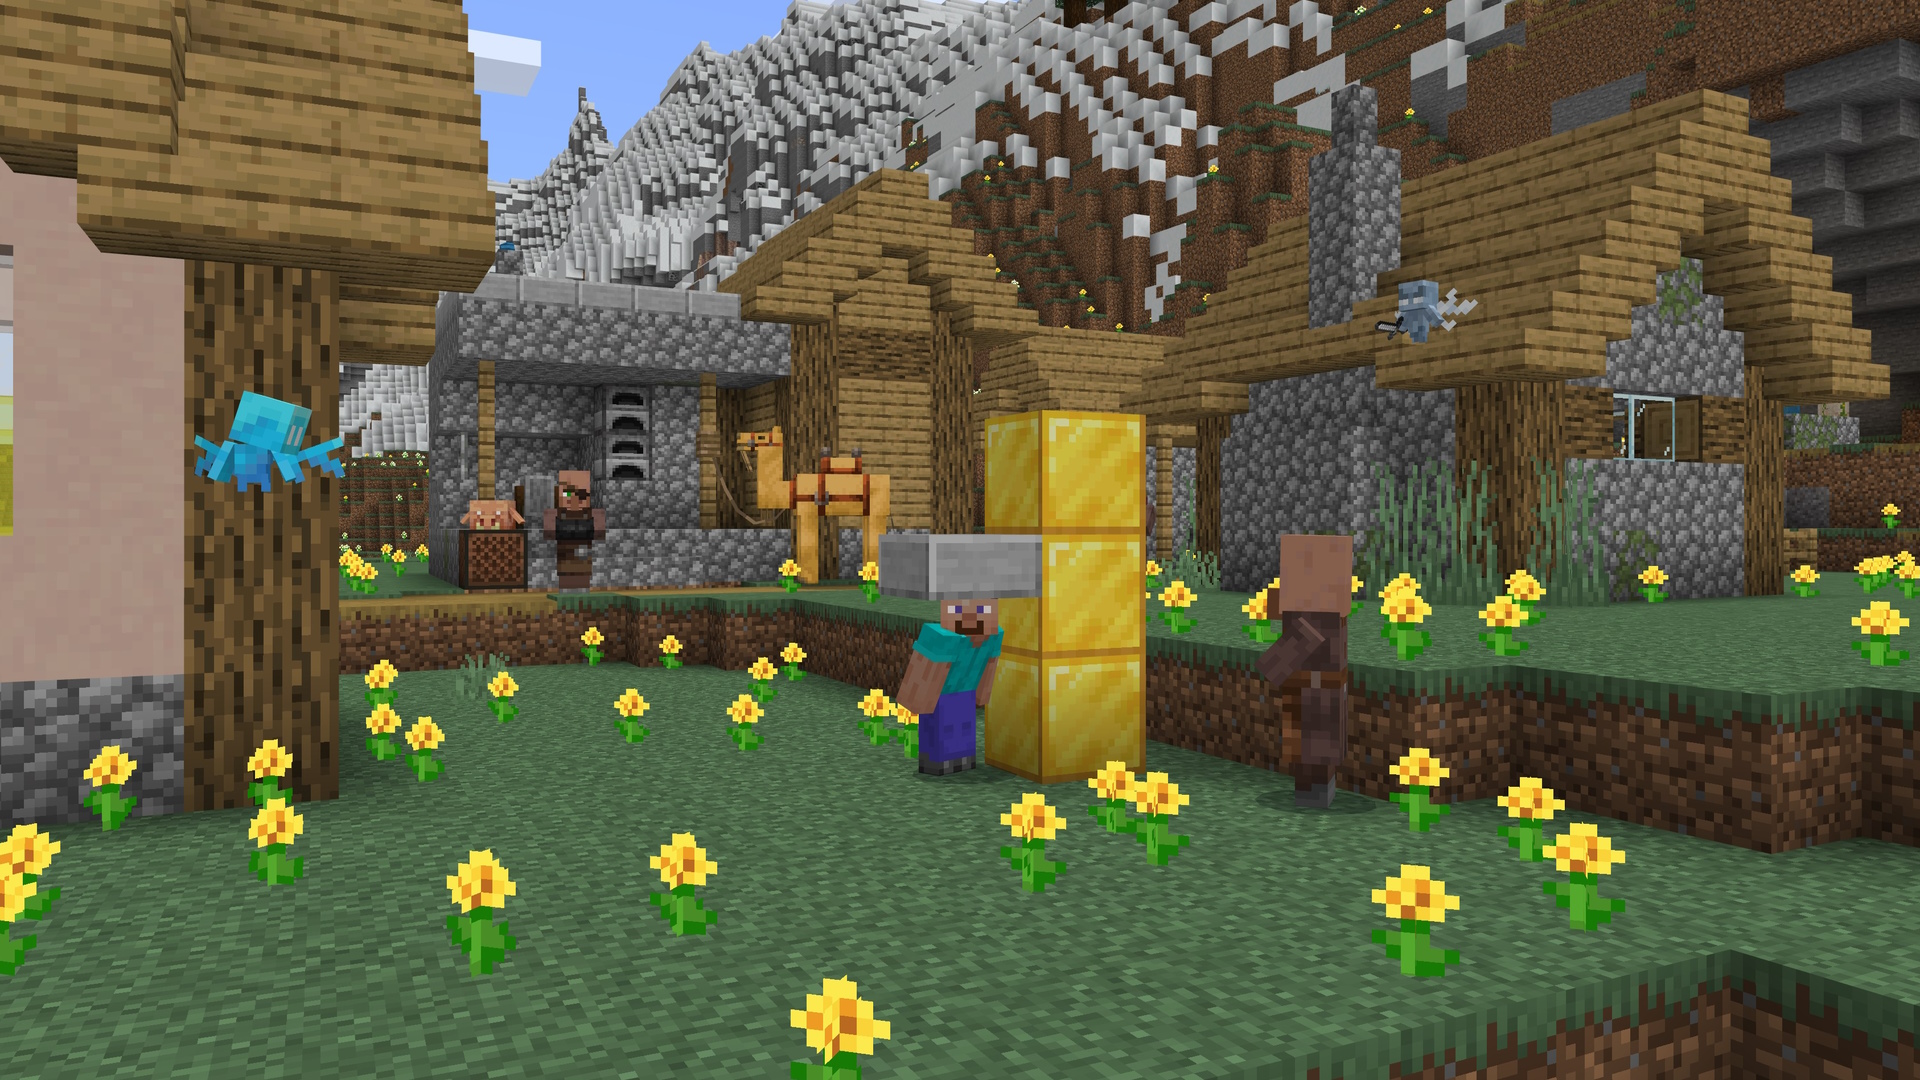 A Minecraft screenshot of a village, featuring a player in a Steve skin sneaking in a 1.5 block space.
